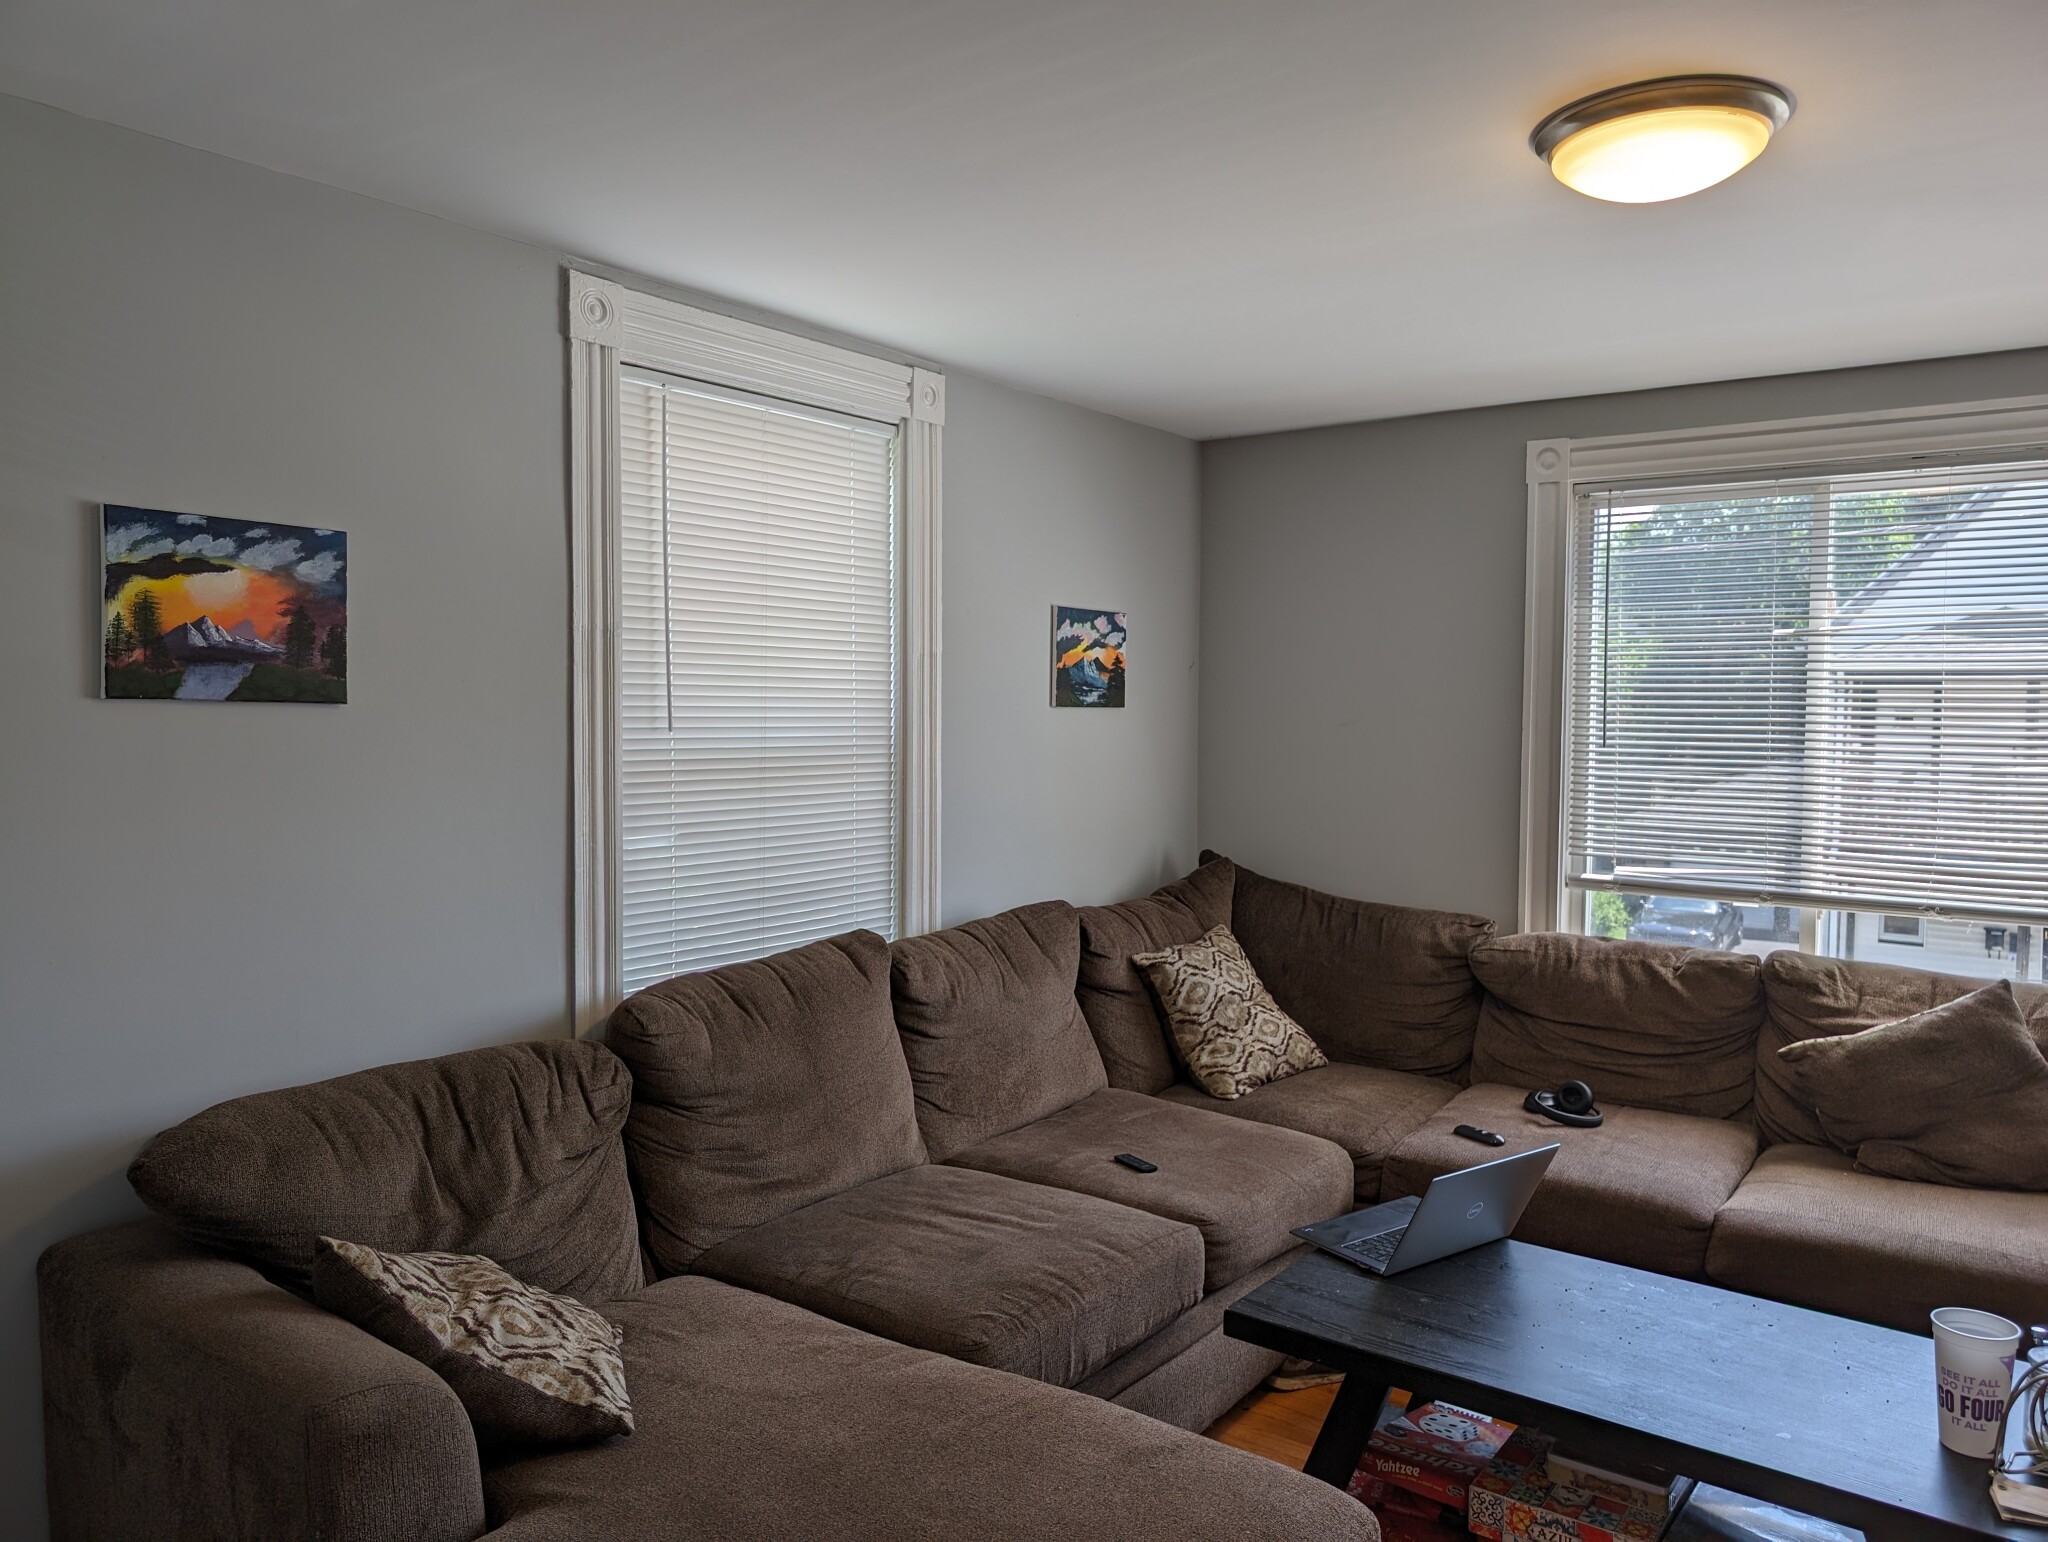 Photos of apartment on Kearney St.,Malden MA 02148